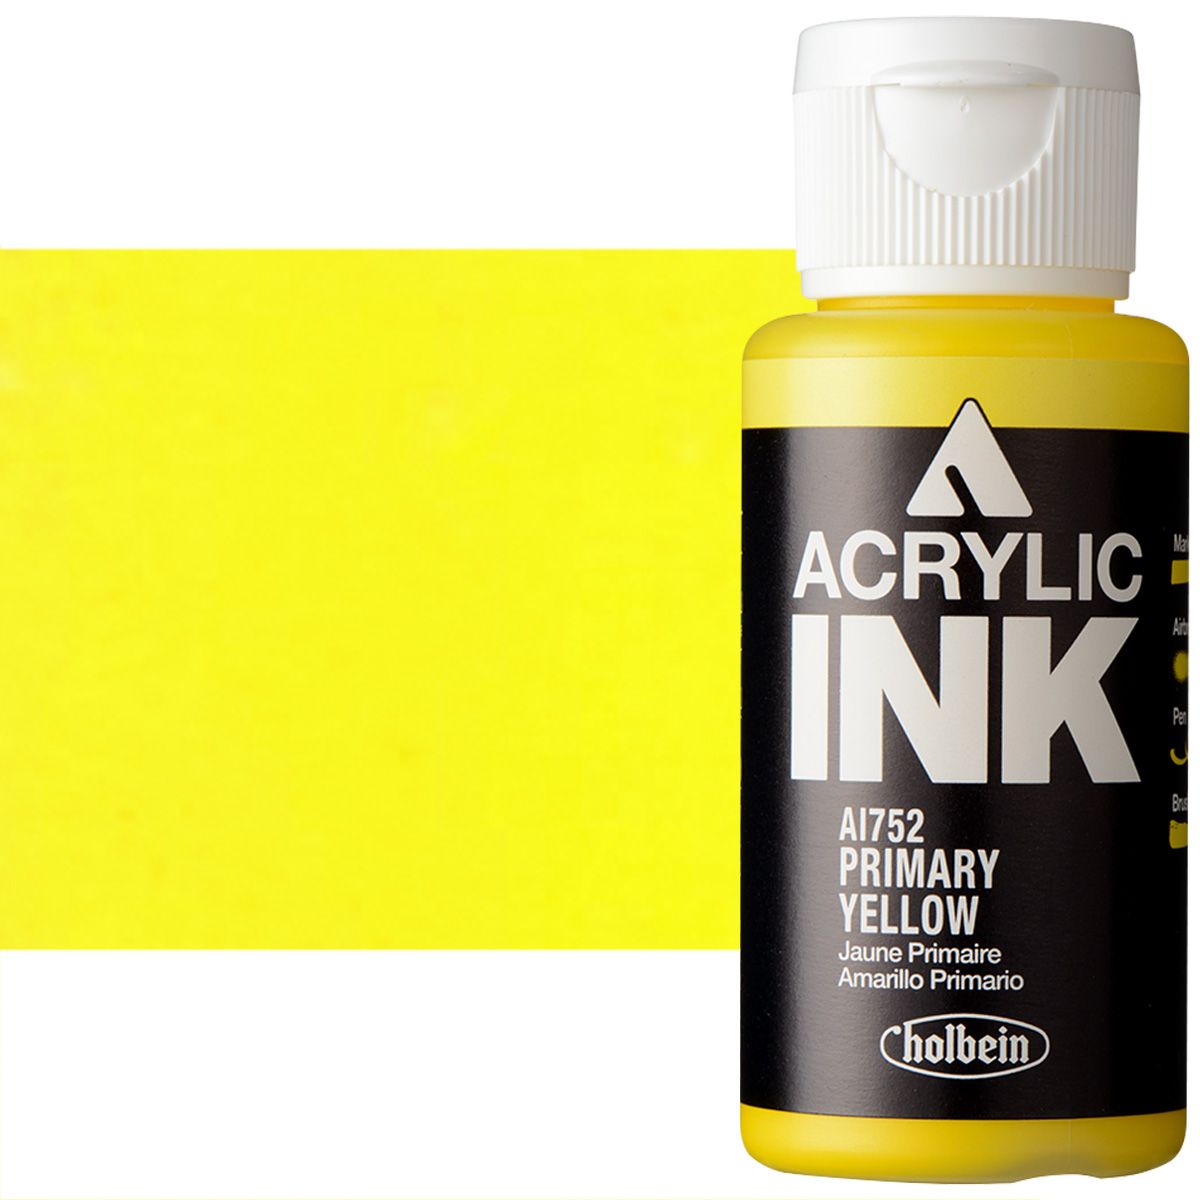 Holbein Acrylic Ink - Primary Yellow, 30ml